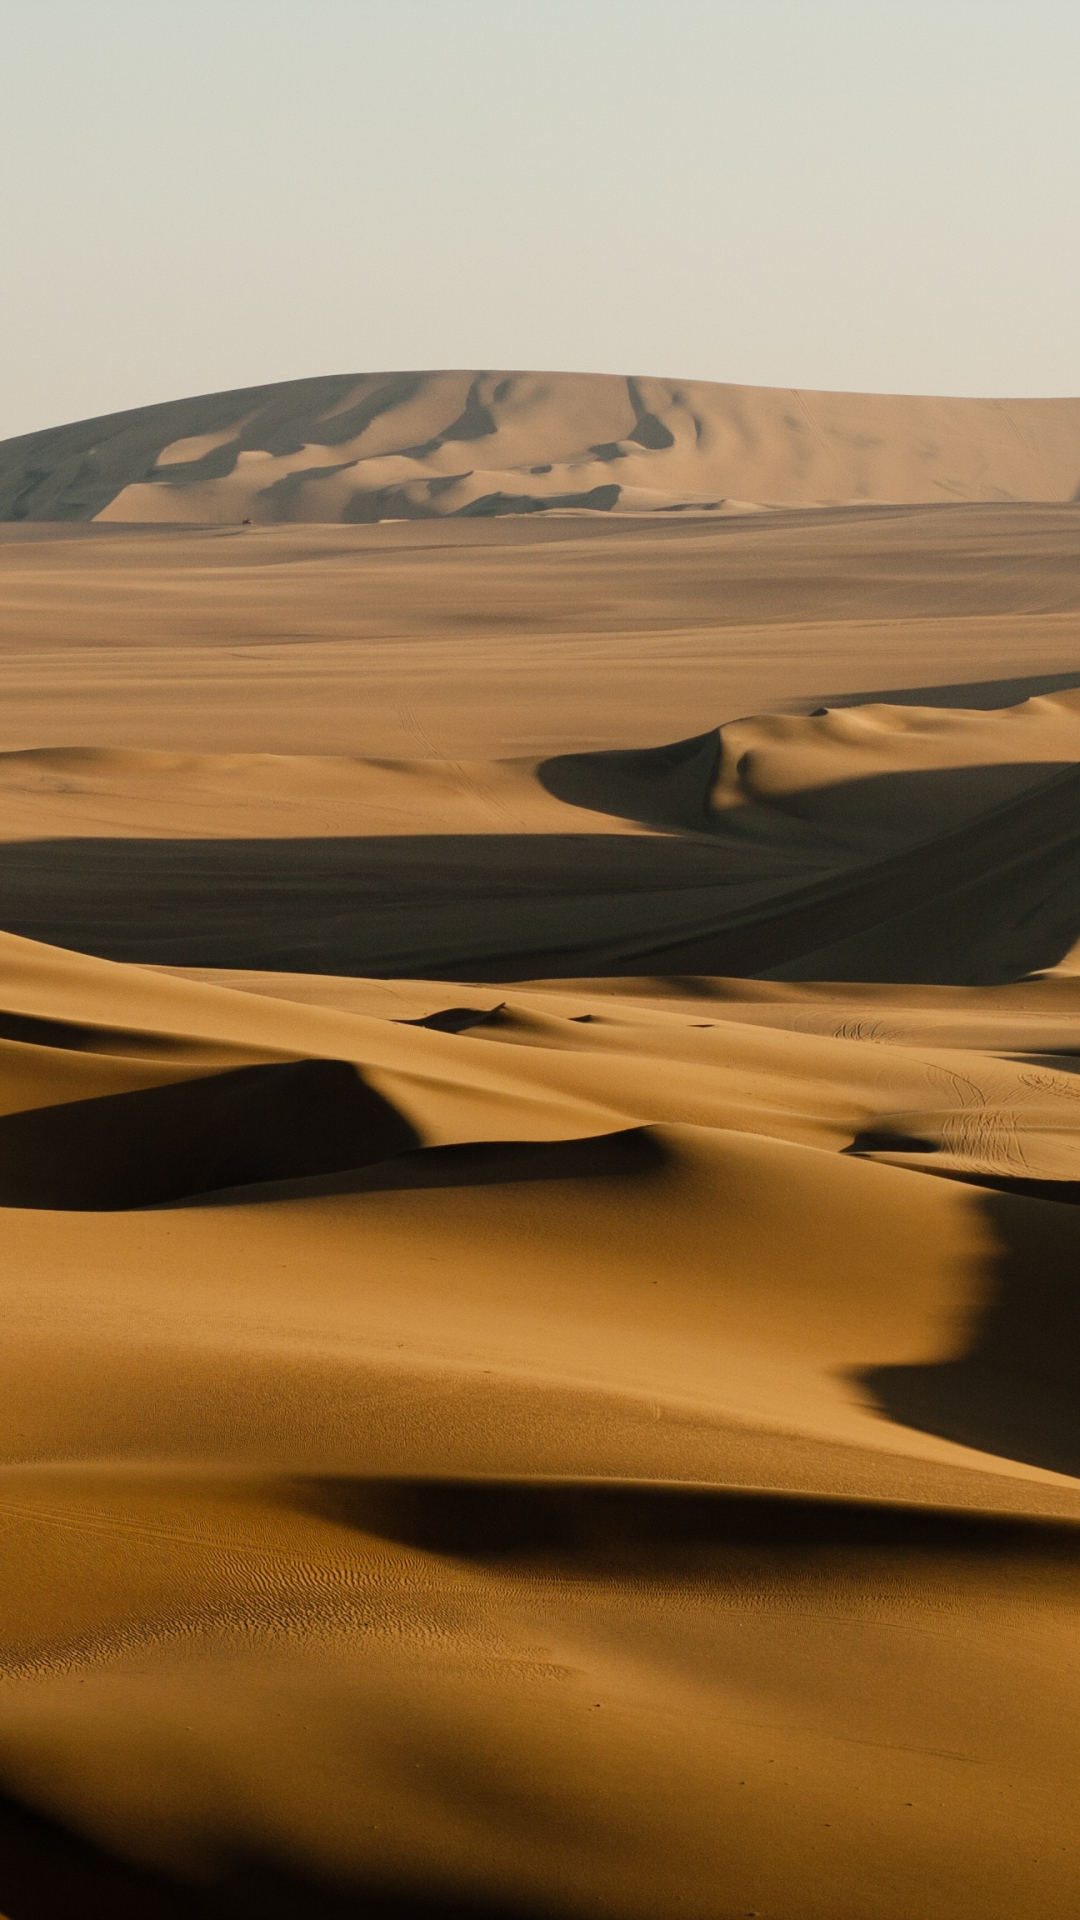 Sand Dune Wallpapers